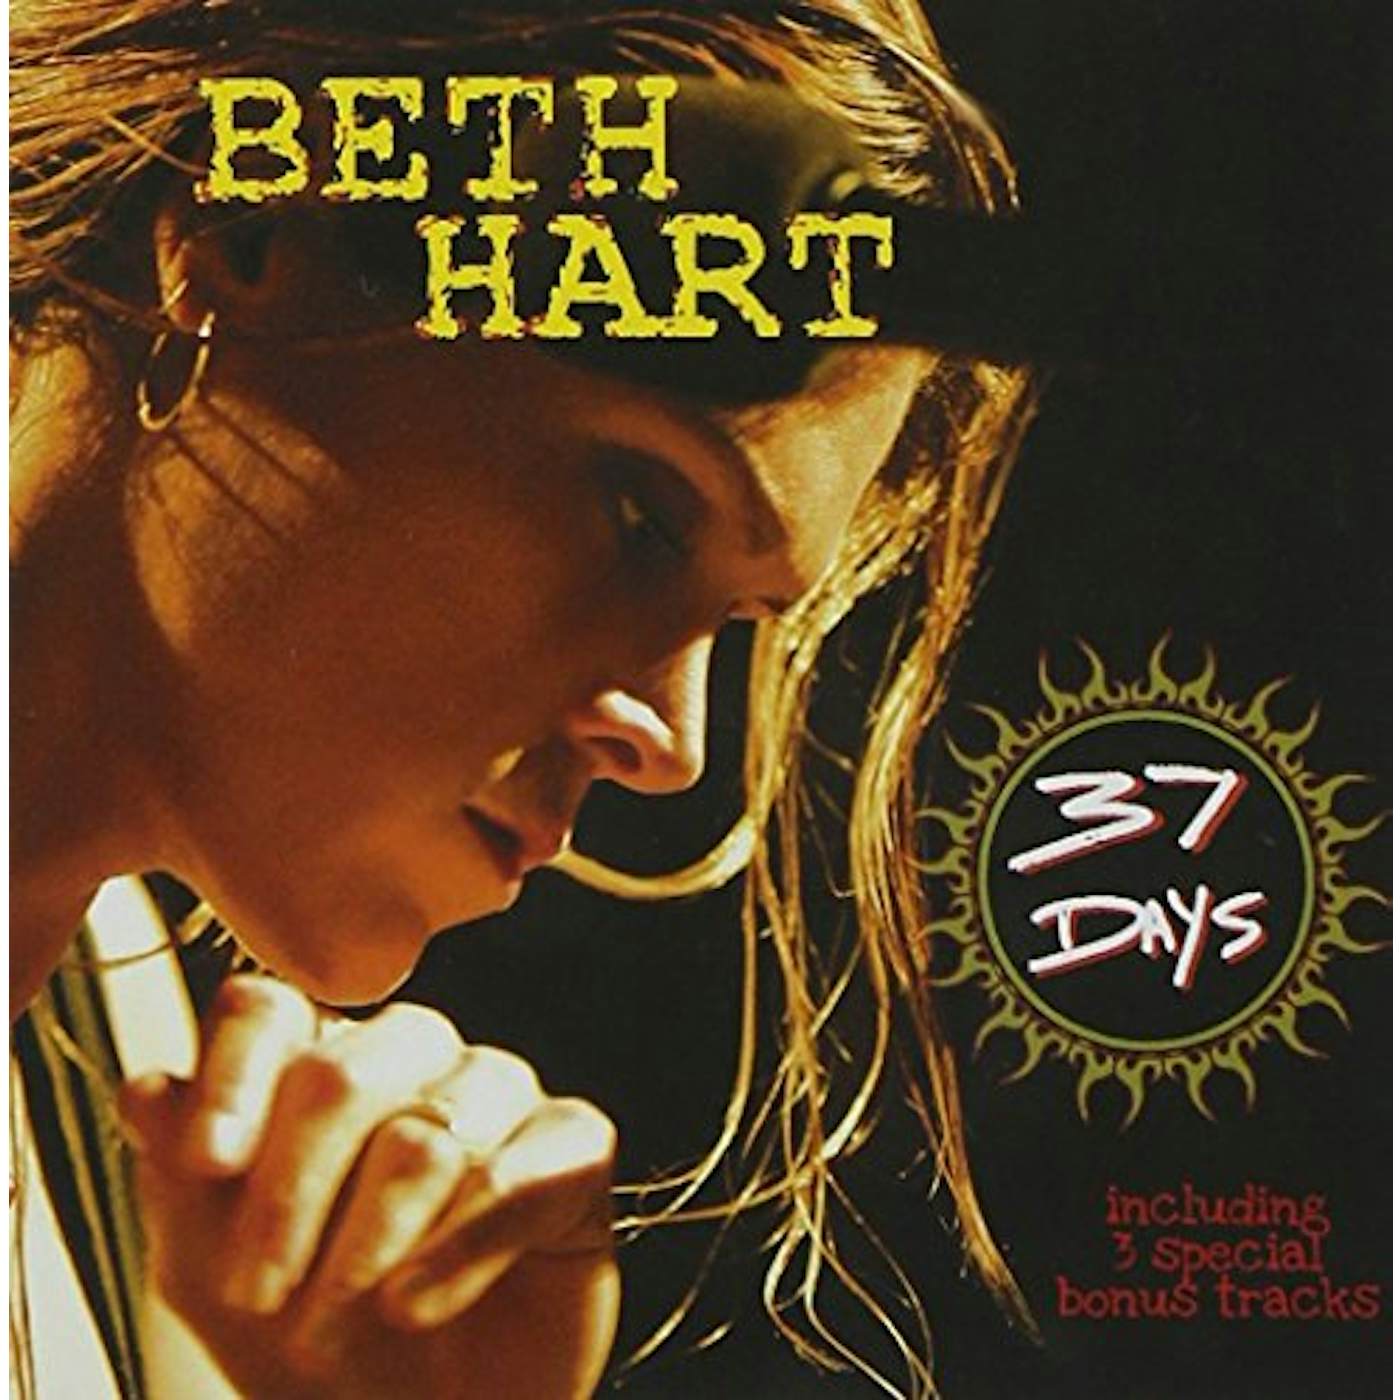 Beth Hart 37 Days Vinyl Record